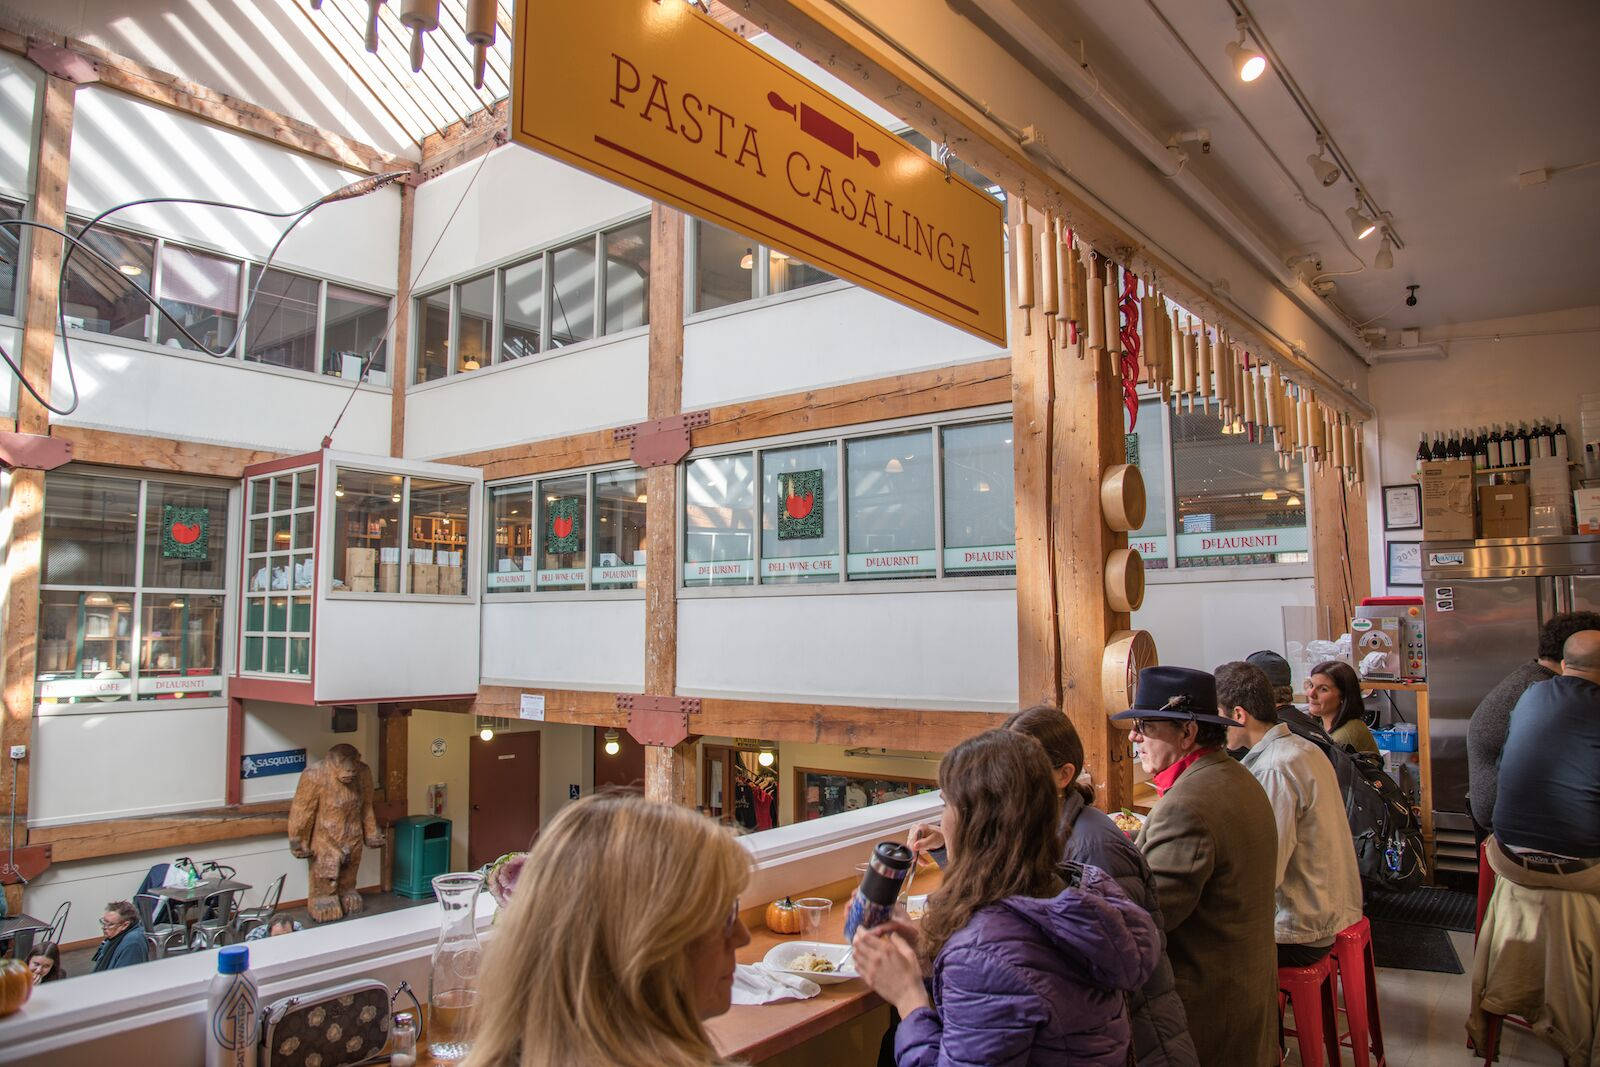 Pike Place Market Pasta Casalinga Would Translate To 